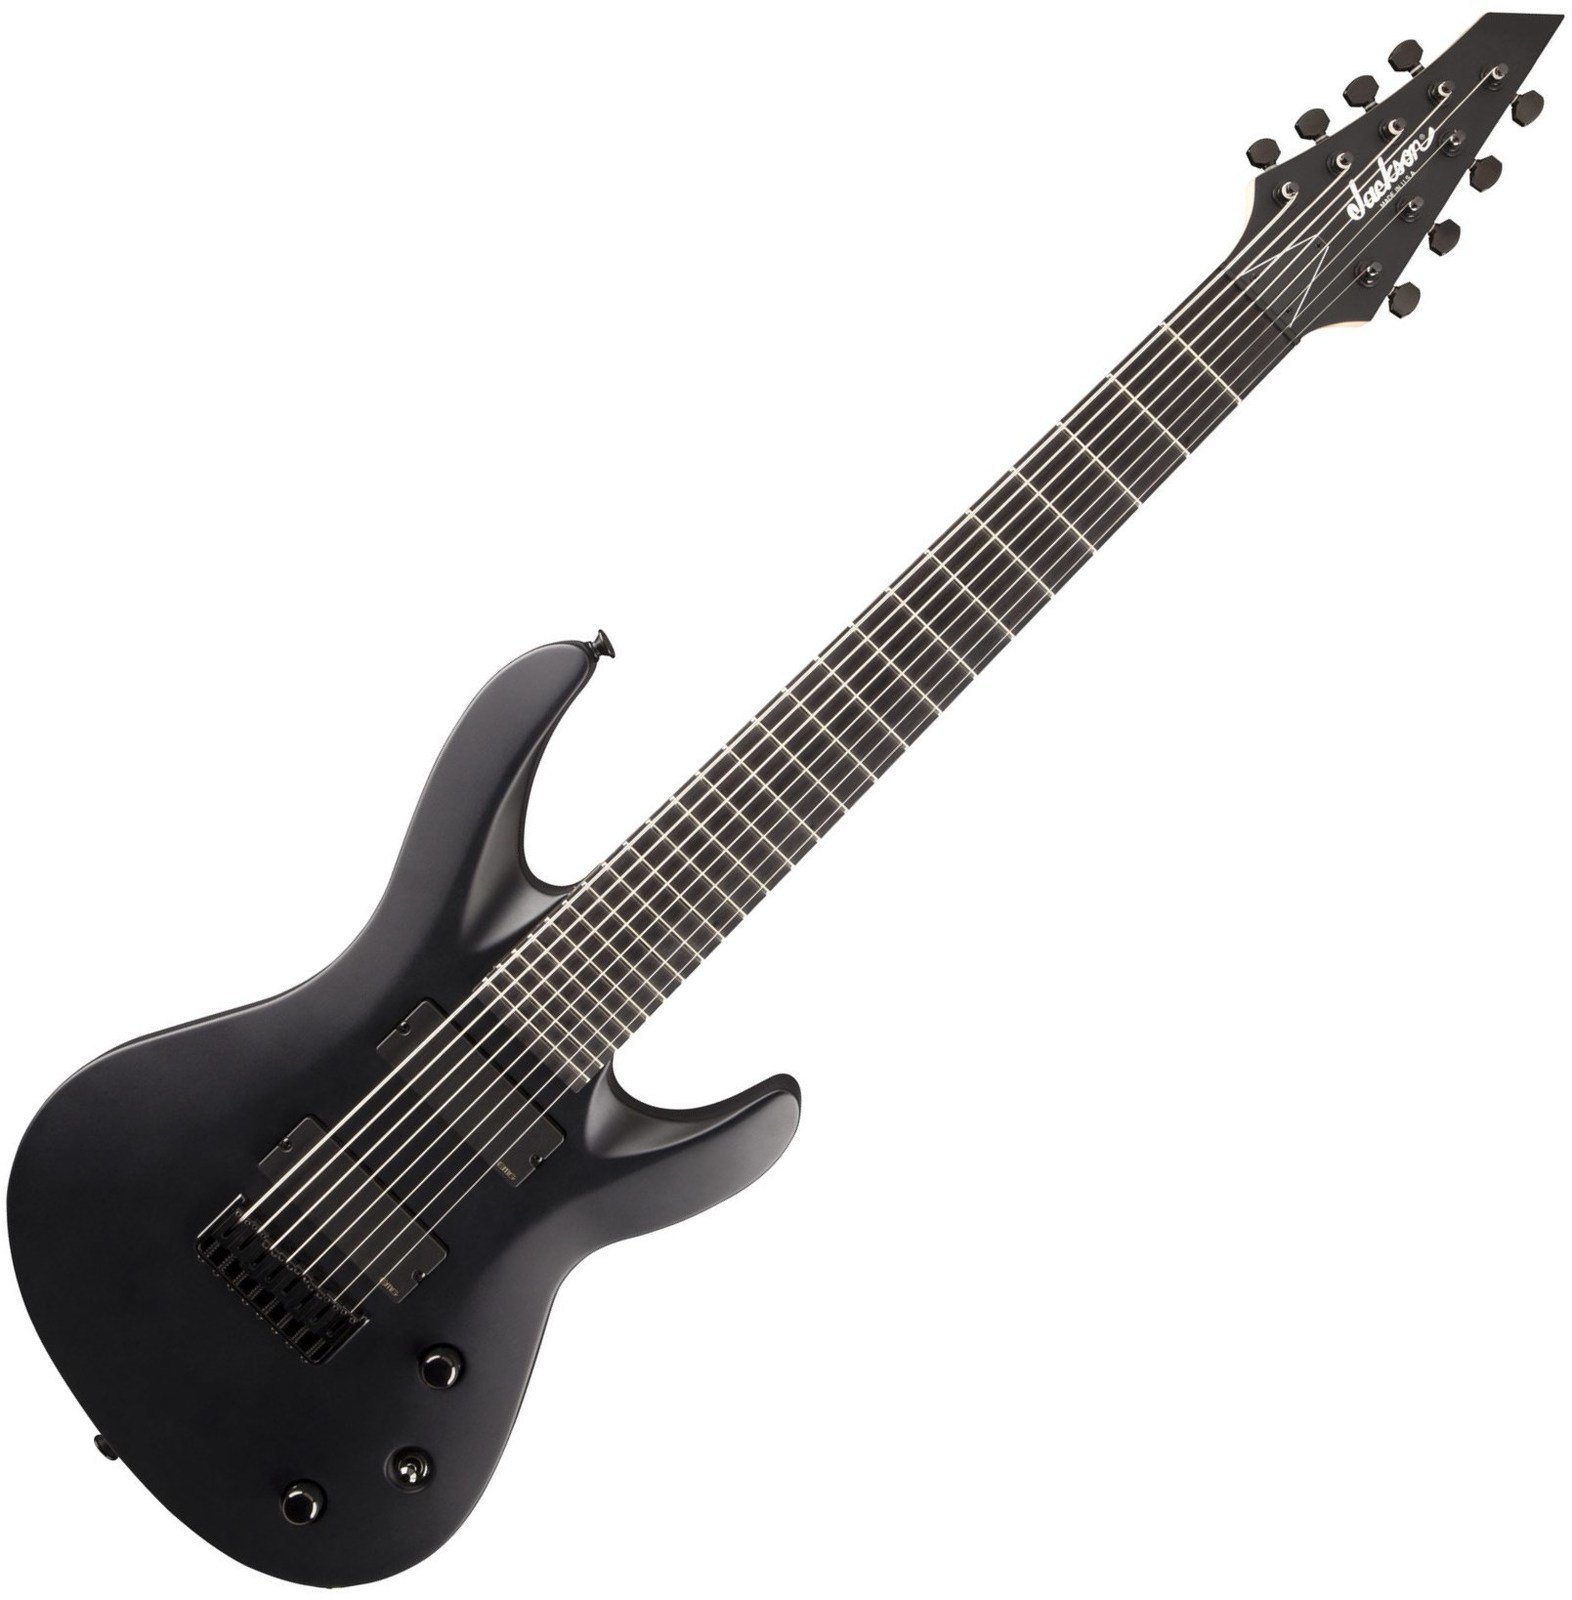 8-saitige E-Gitarre Jackson USA Select B8MG Deluxe Satin Black with Case